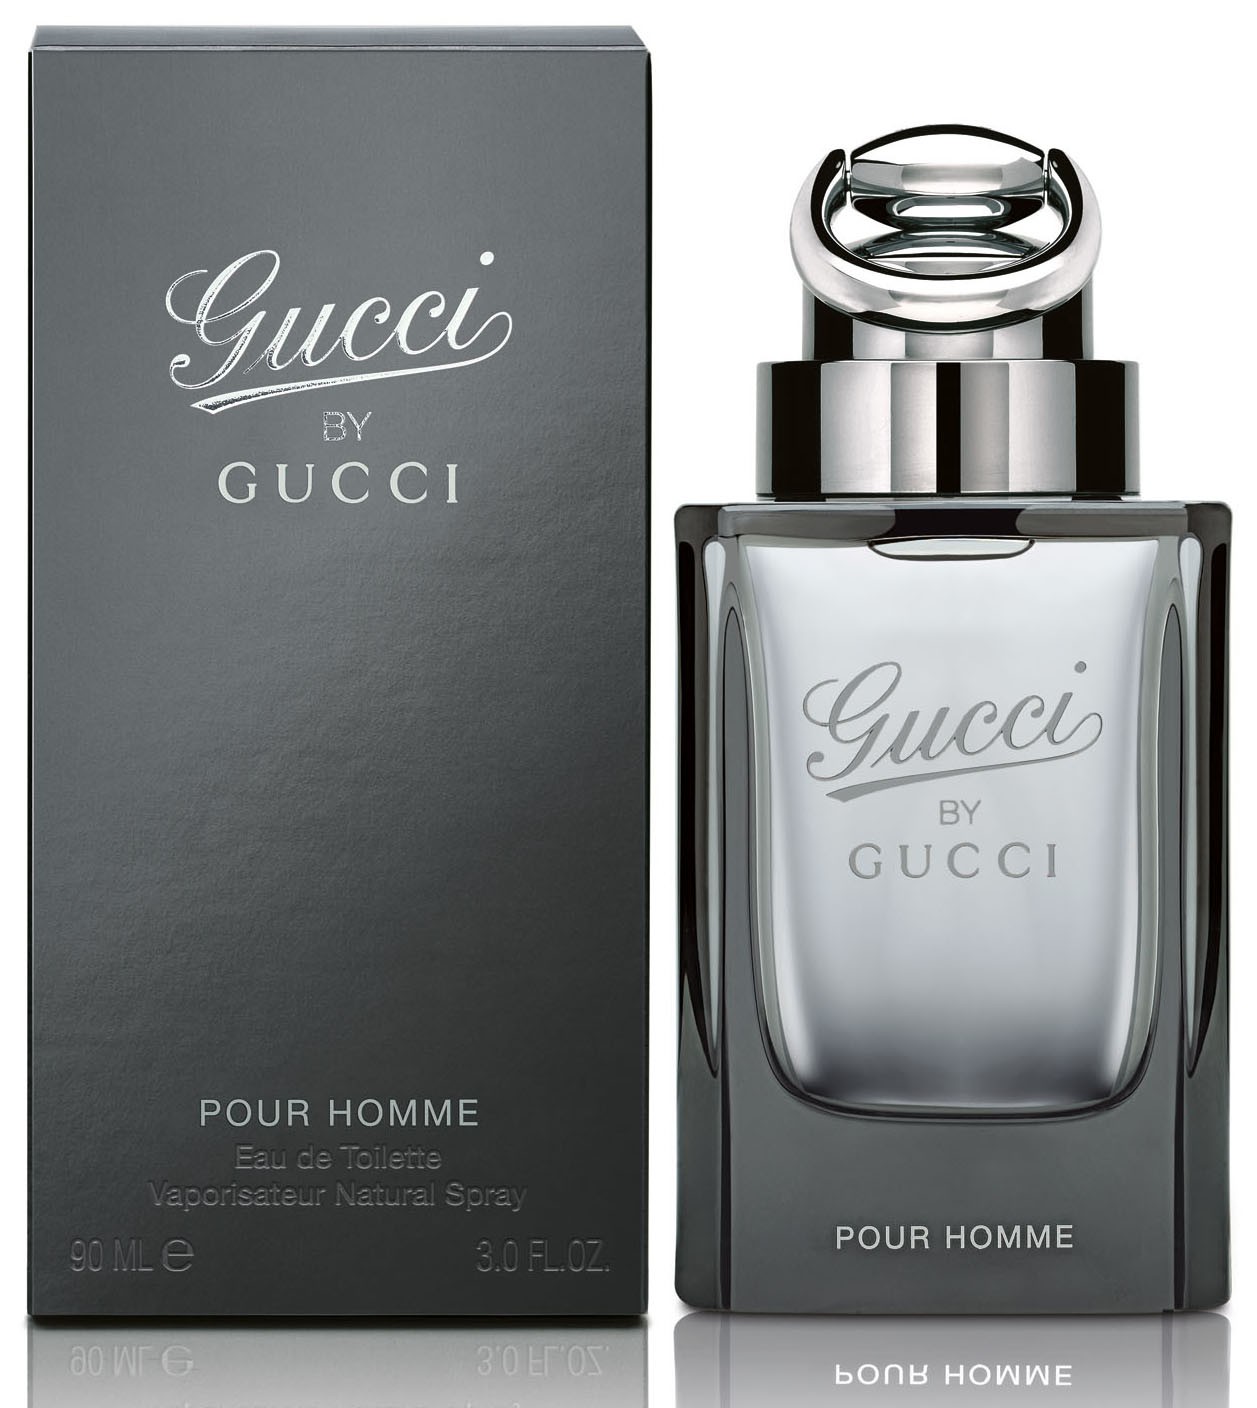 Gucci homme купить. Gucci by Gucci pour homme EDT, 90 ml. Gucci by Gucci pour homme 90 мл. Gucci by Gucci pour homme 90ml. Туалетная вода Gucci Gucci by Gucci pour homme.